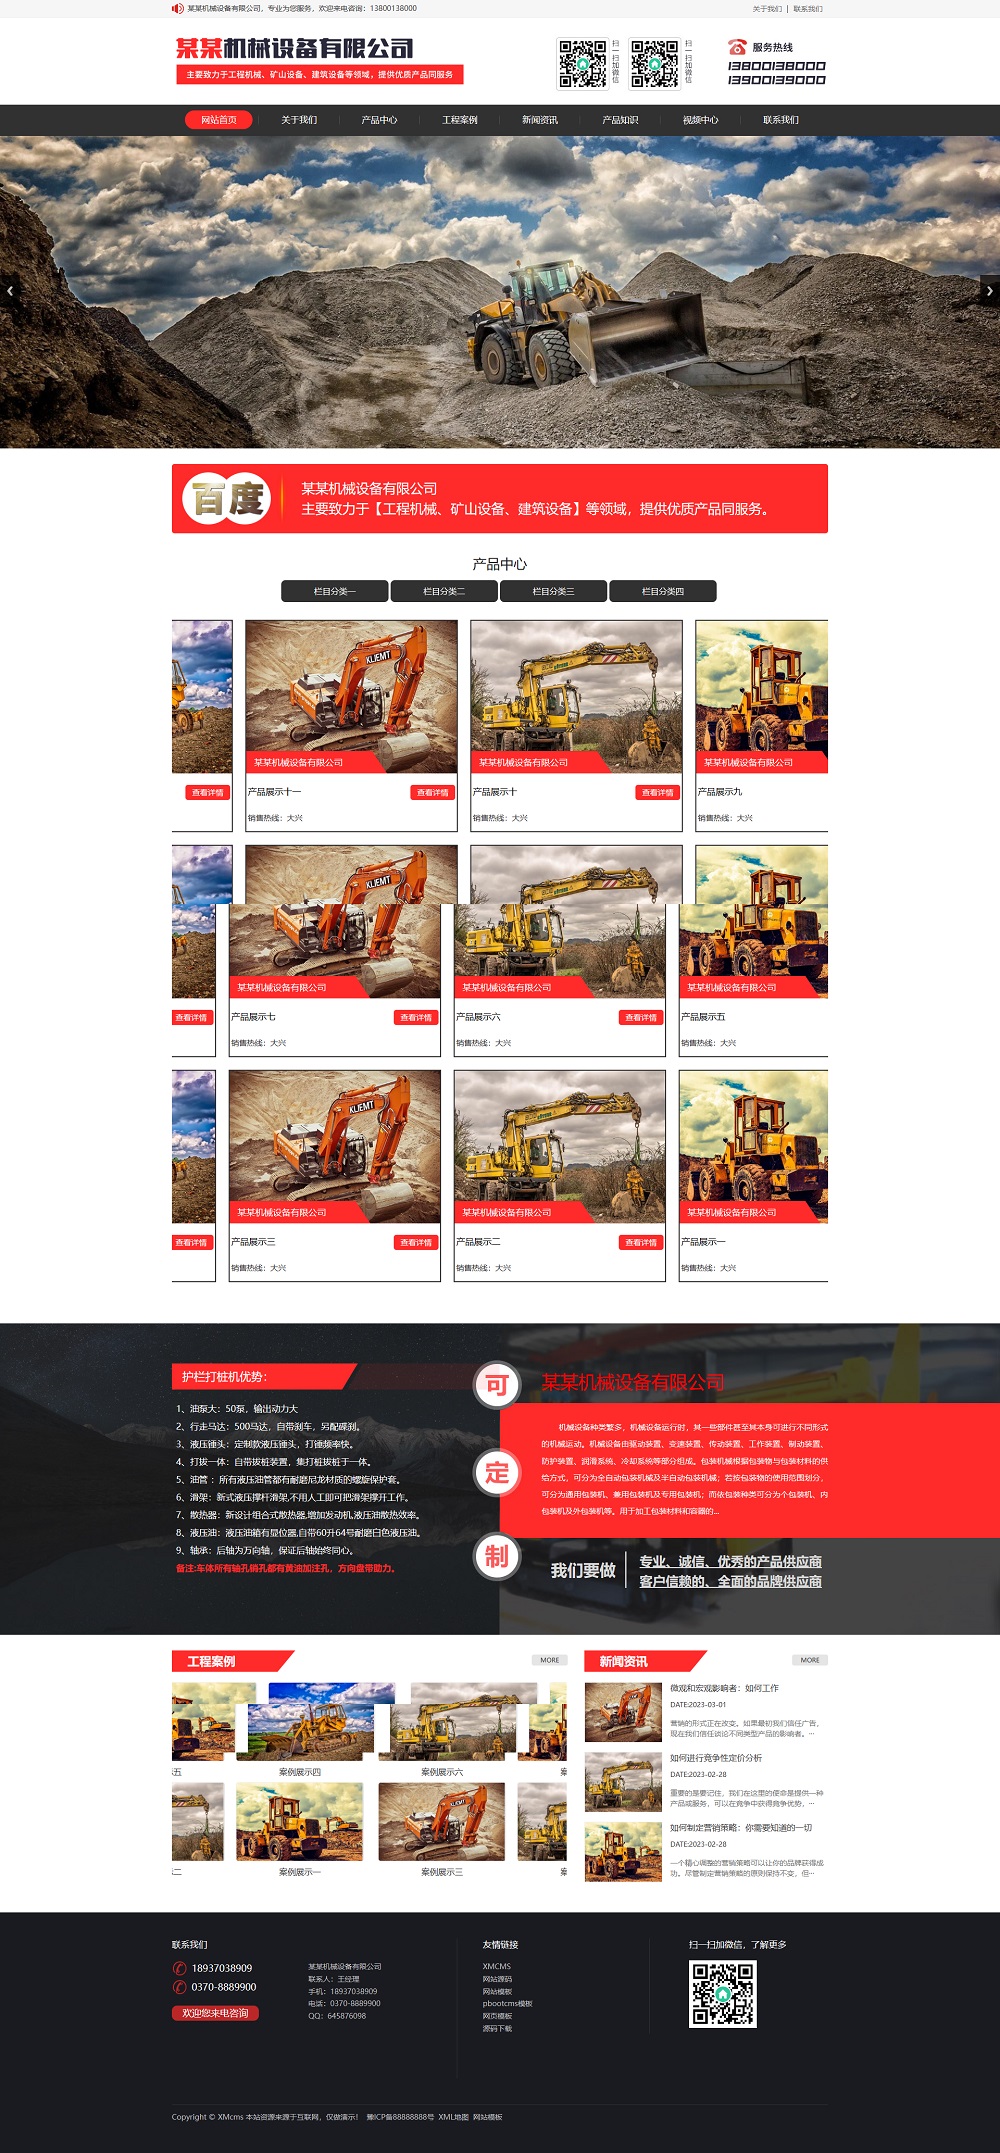 (PC+WAP)红色大气的机械设备网站pbootcms模板 重工工业设备网站源码下载